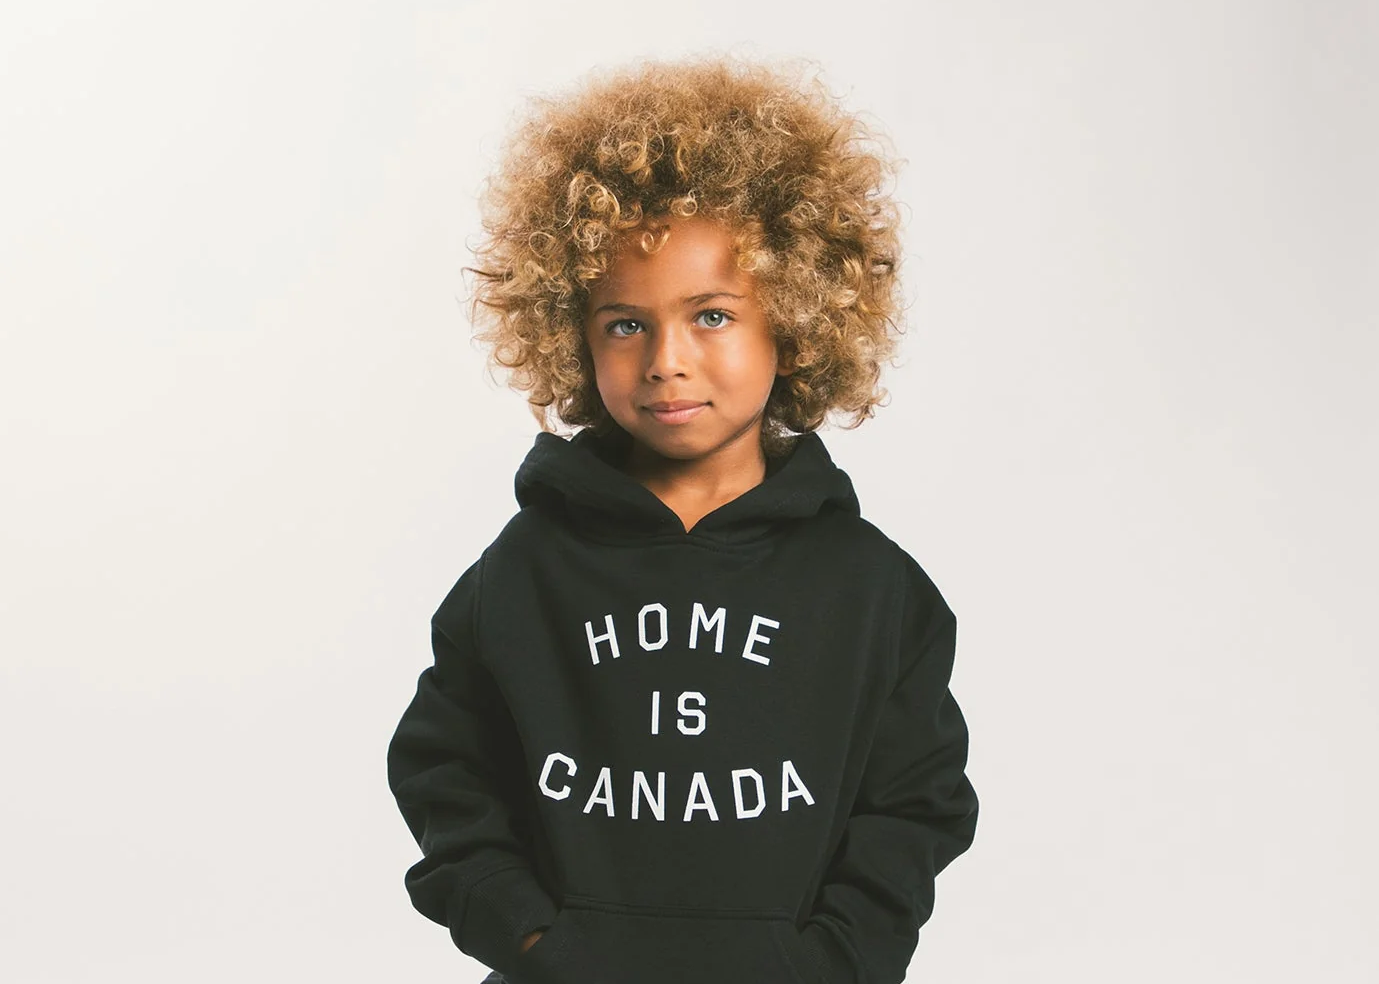 Kid models a sweatshirt that reads "Home is Toronto"